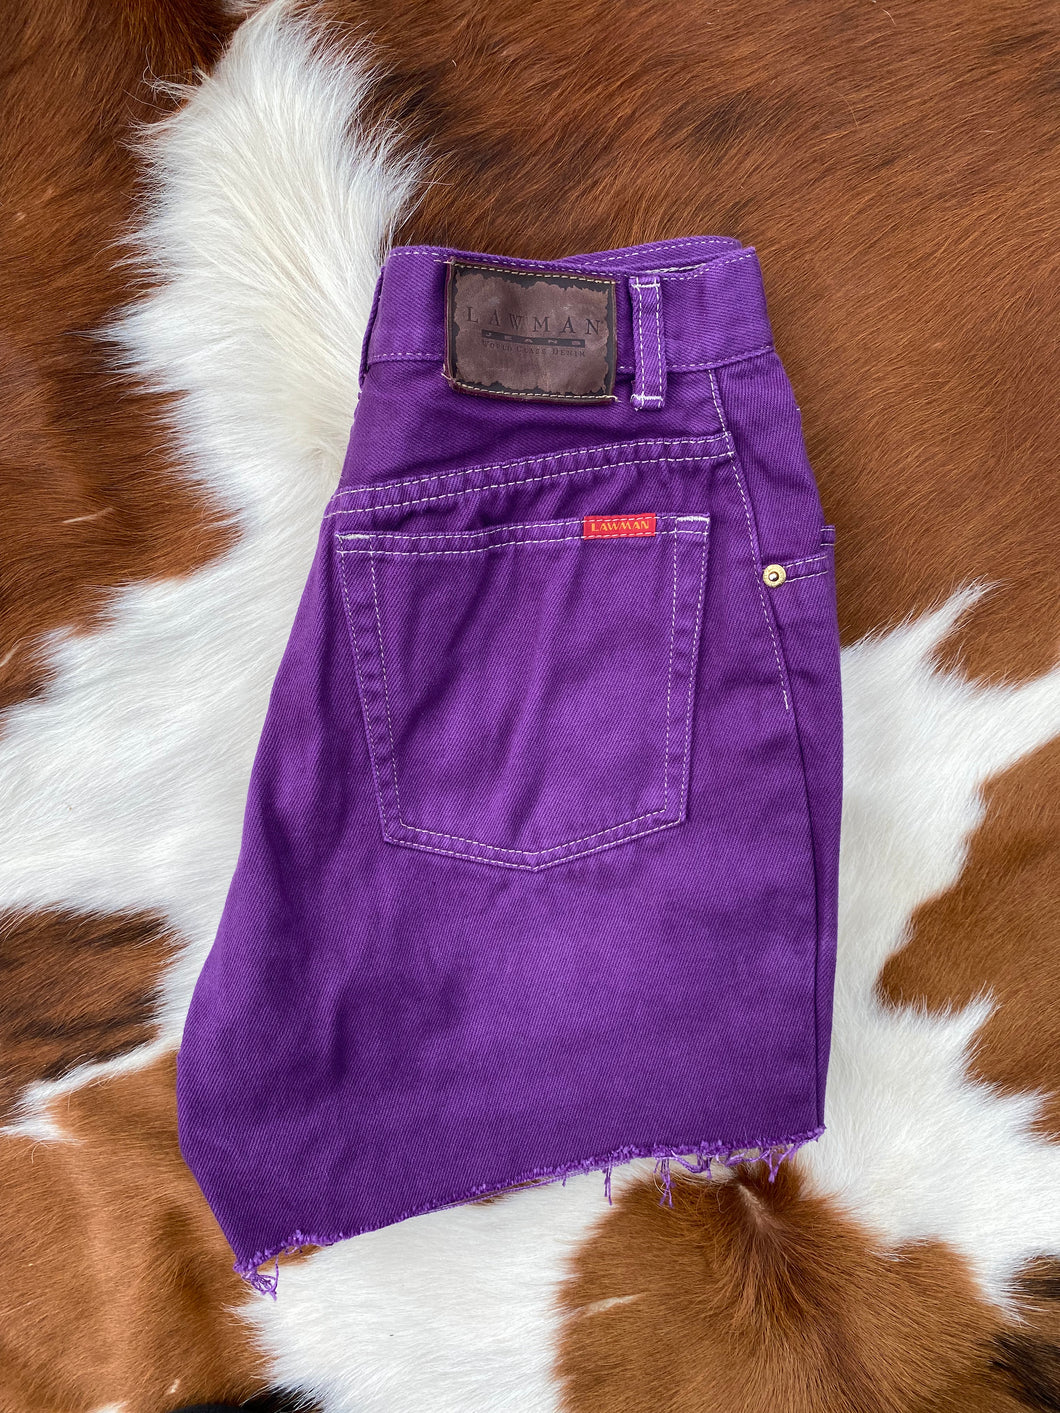 Purple Lawman Shorts